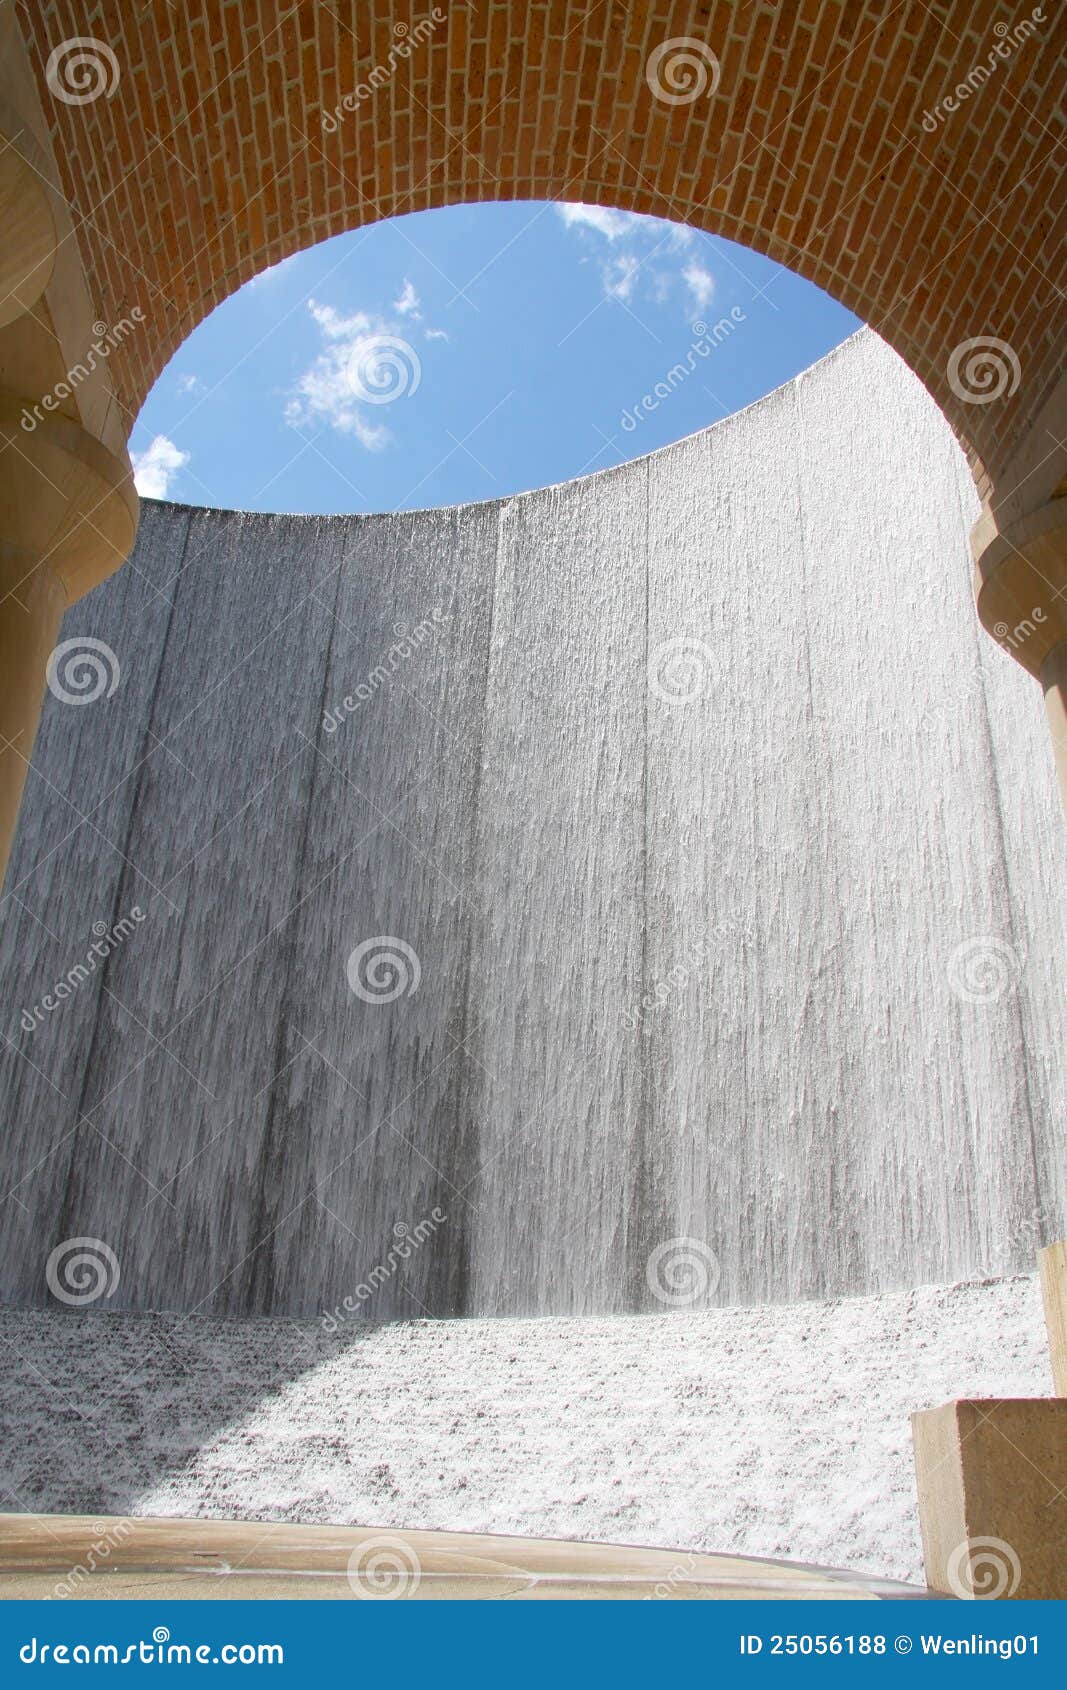 beautiful water wall in houston